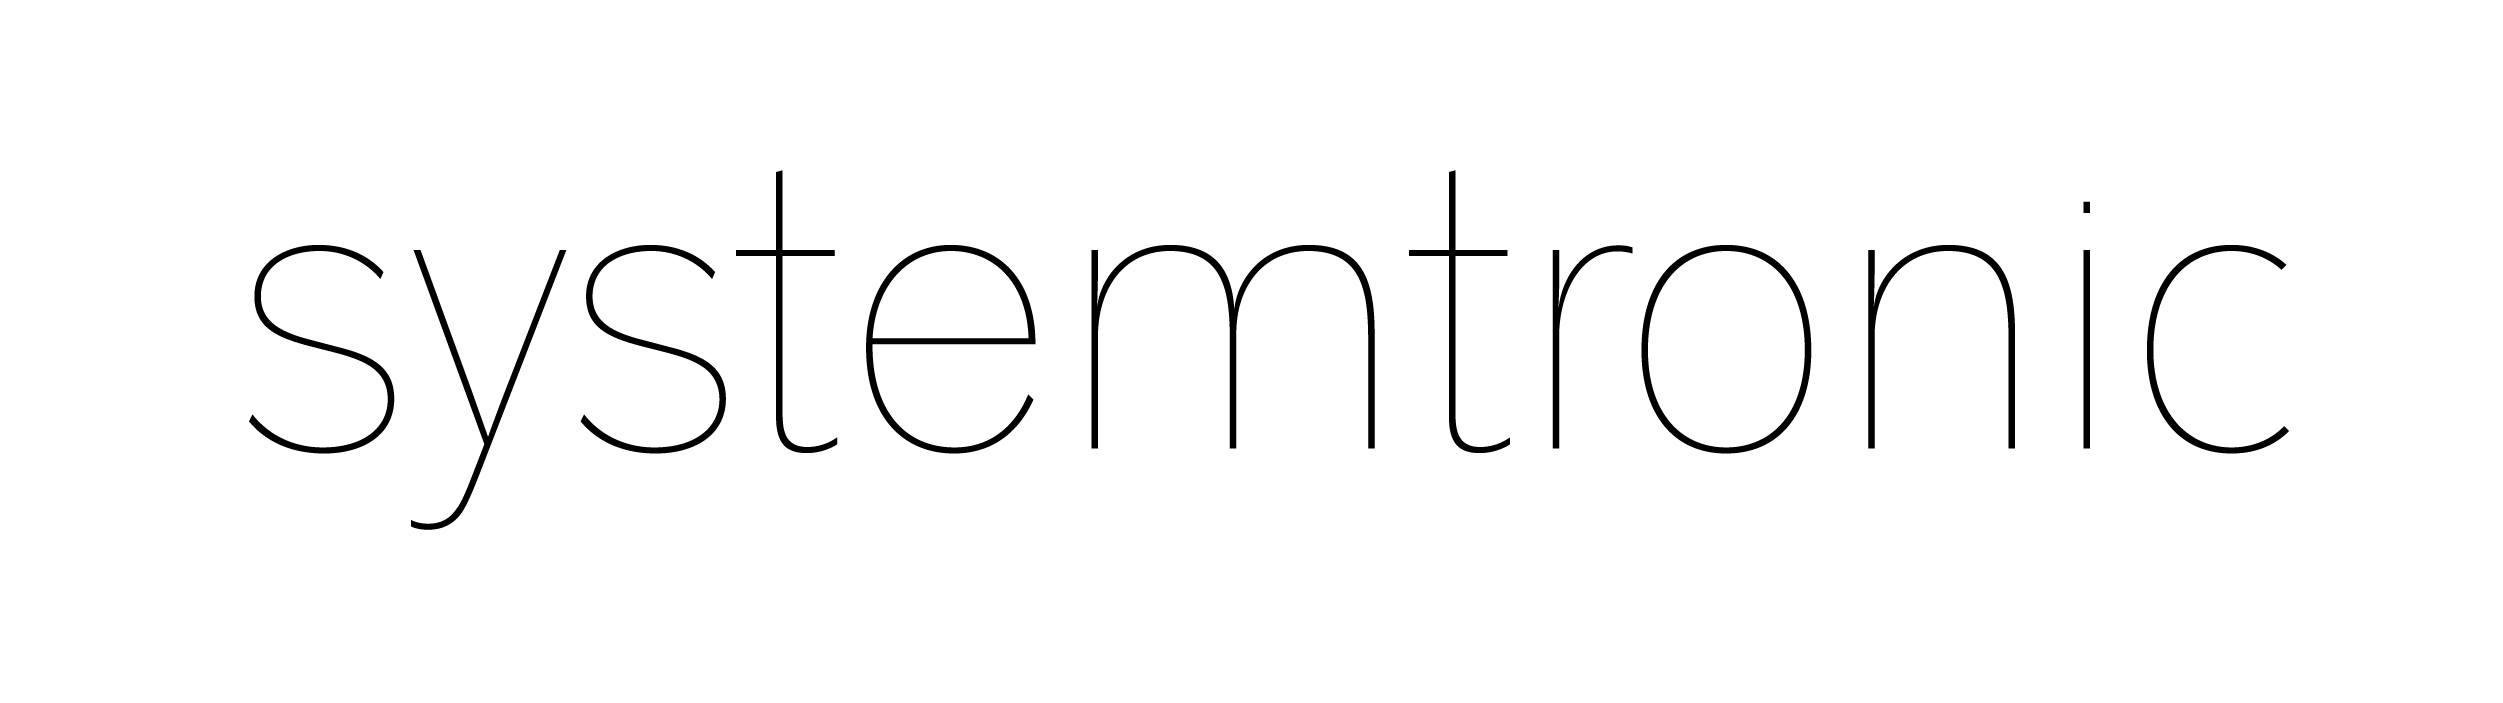 Logo Systemtronic Min